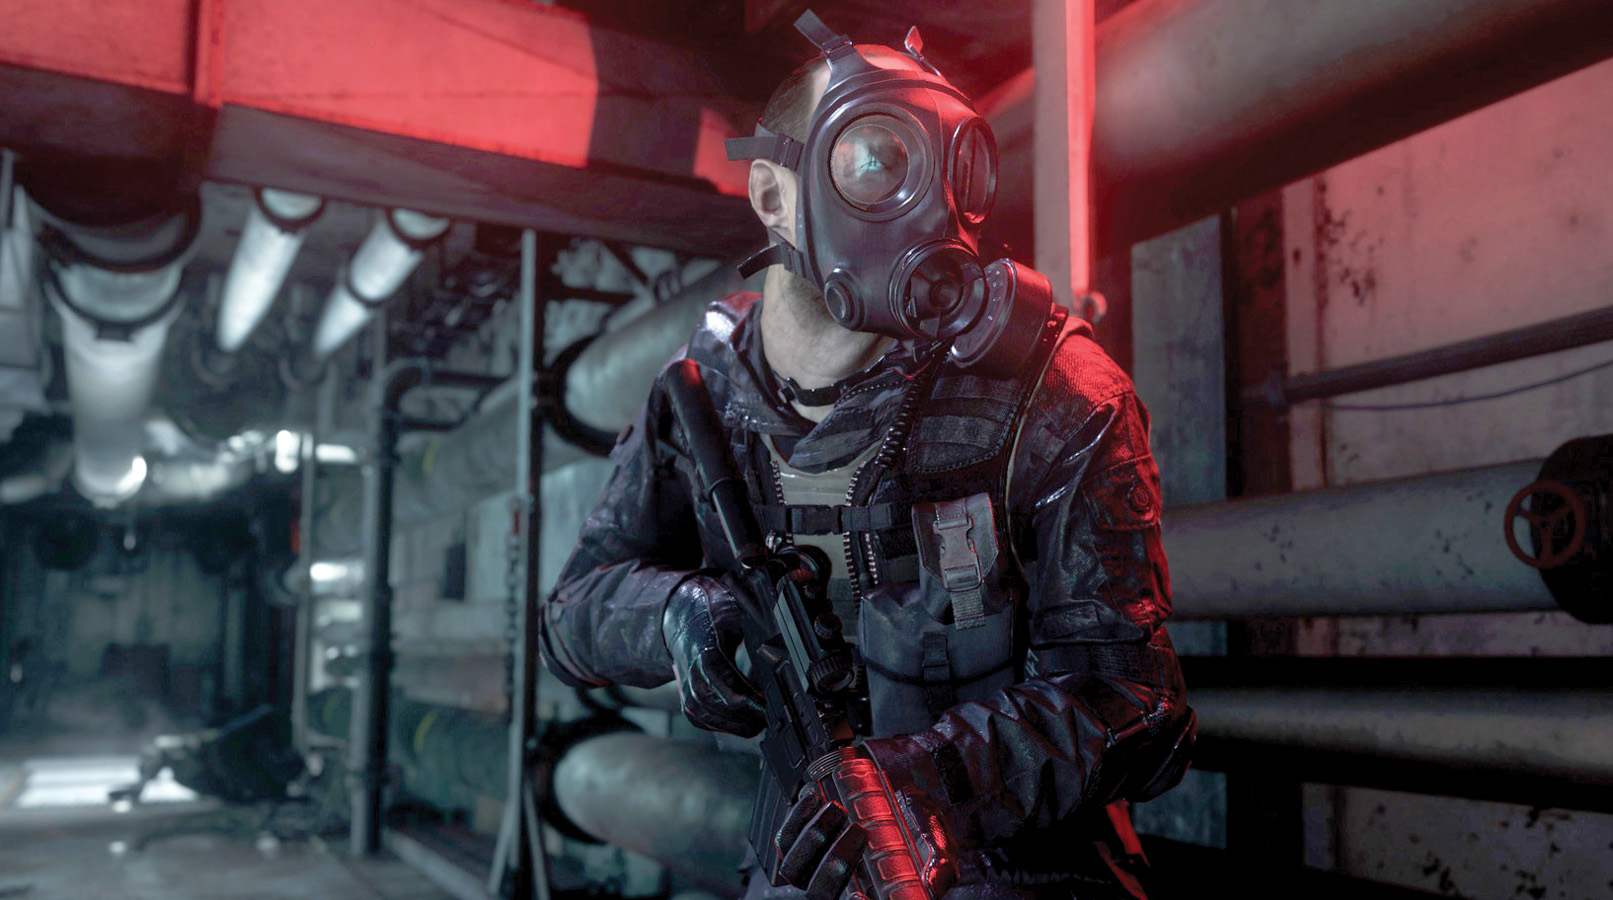 Call of Duty: Modern Warfare Remastered | Activision | GameStop